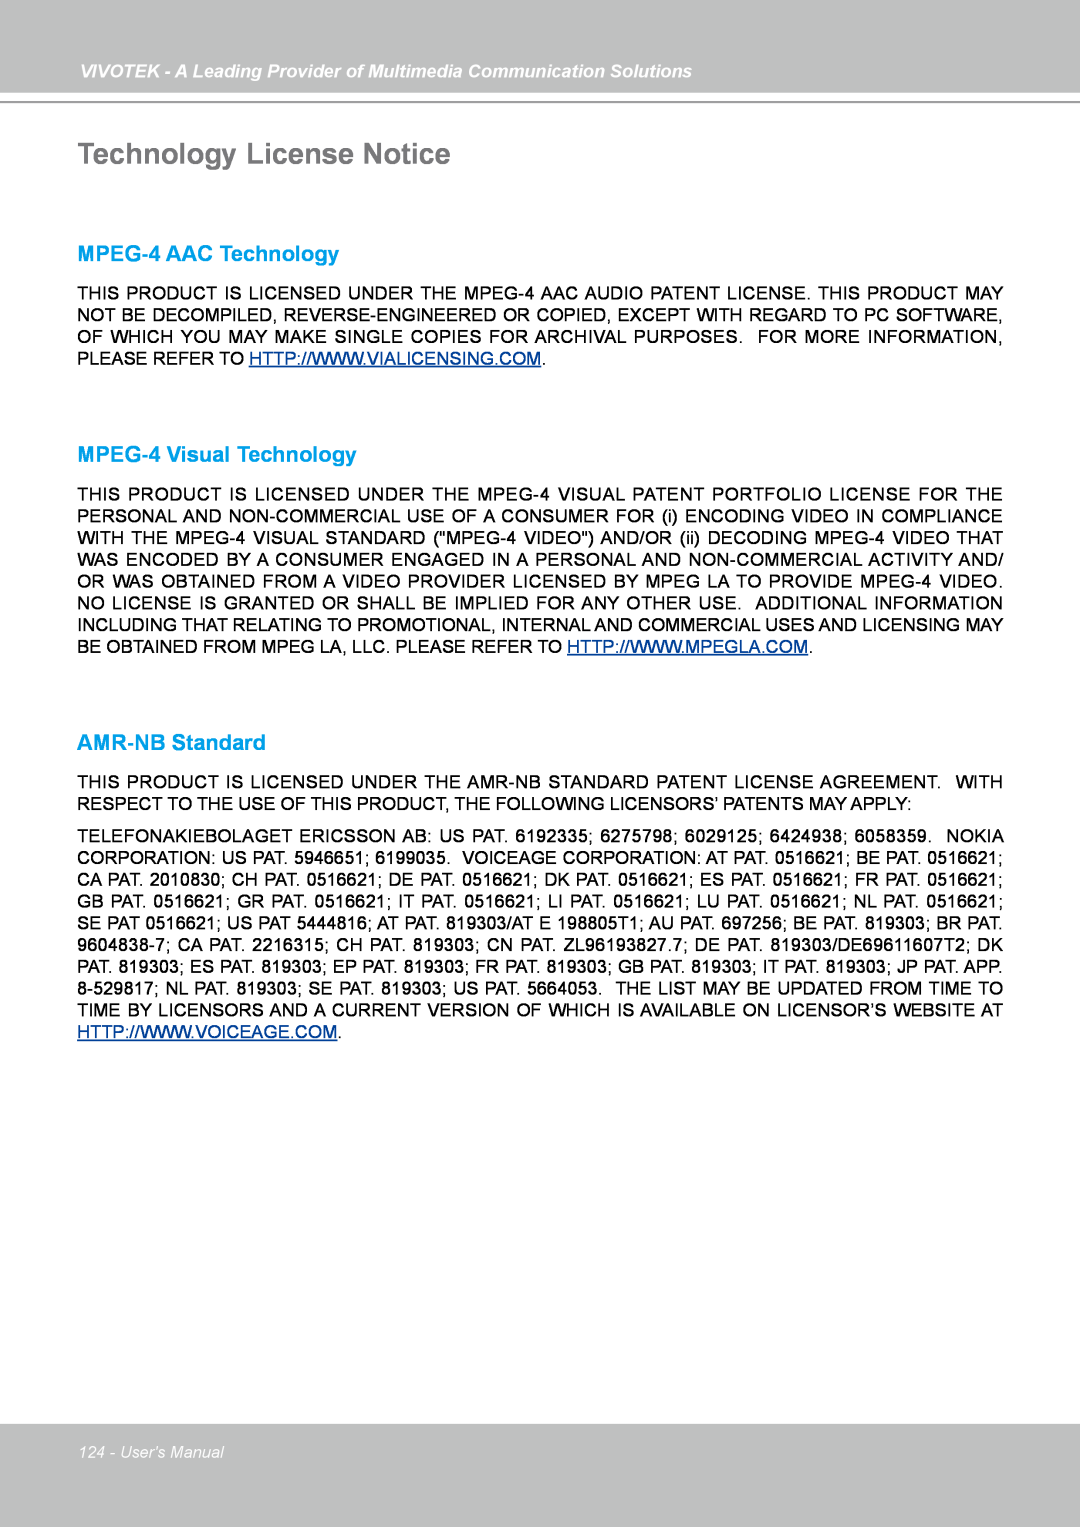 Vivotek IP7130 manual Technology License Notice, MPEG-4 AAC Technology, MPEG-4 Visual Technology, AMR-NB Standard 